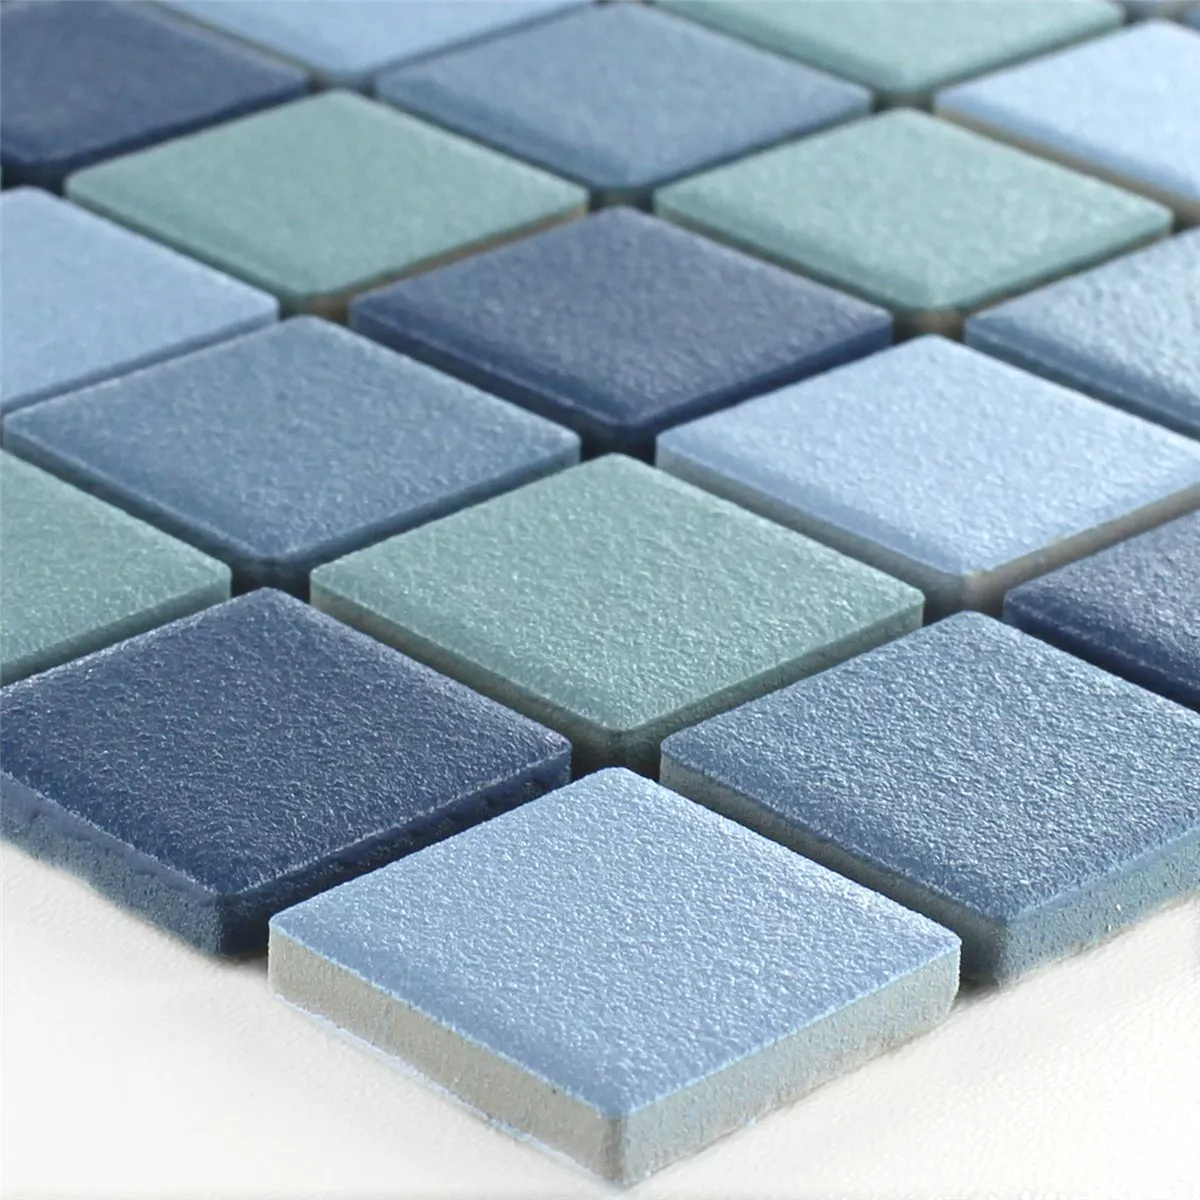 Mosaic Tiles Ceramic Non Slip Blue Mix